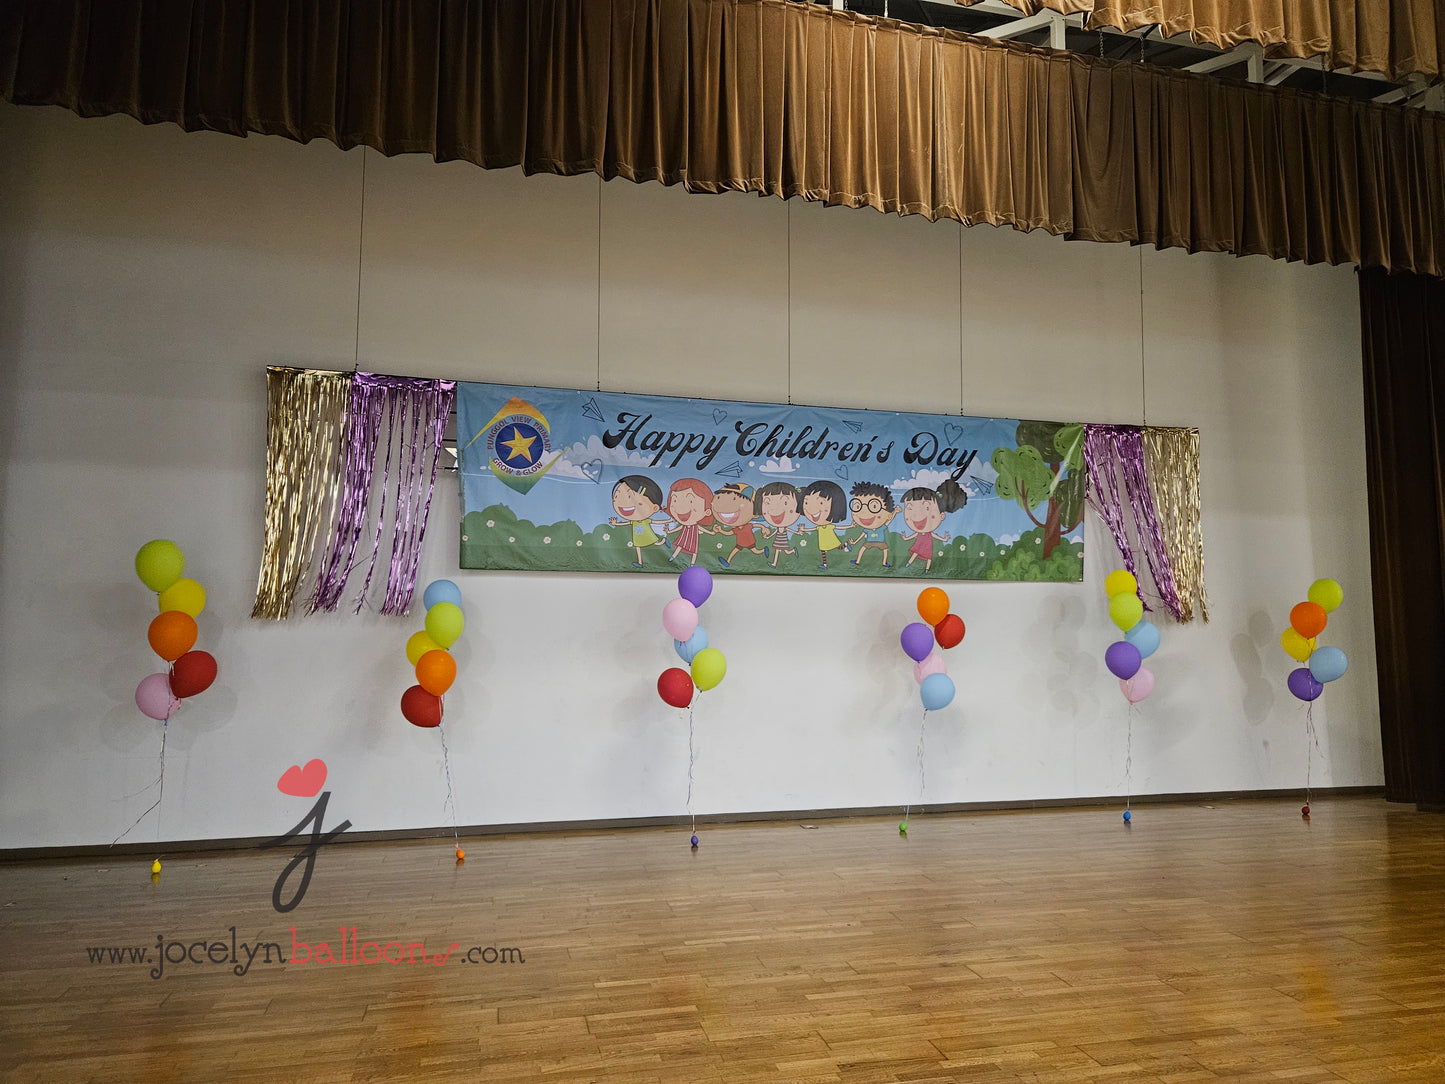 School Boy & School Girl Balloon Columns Decorations For School